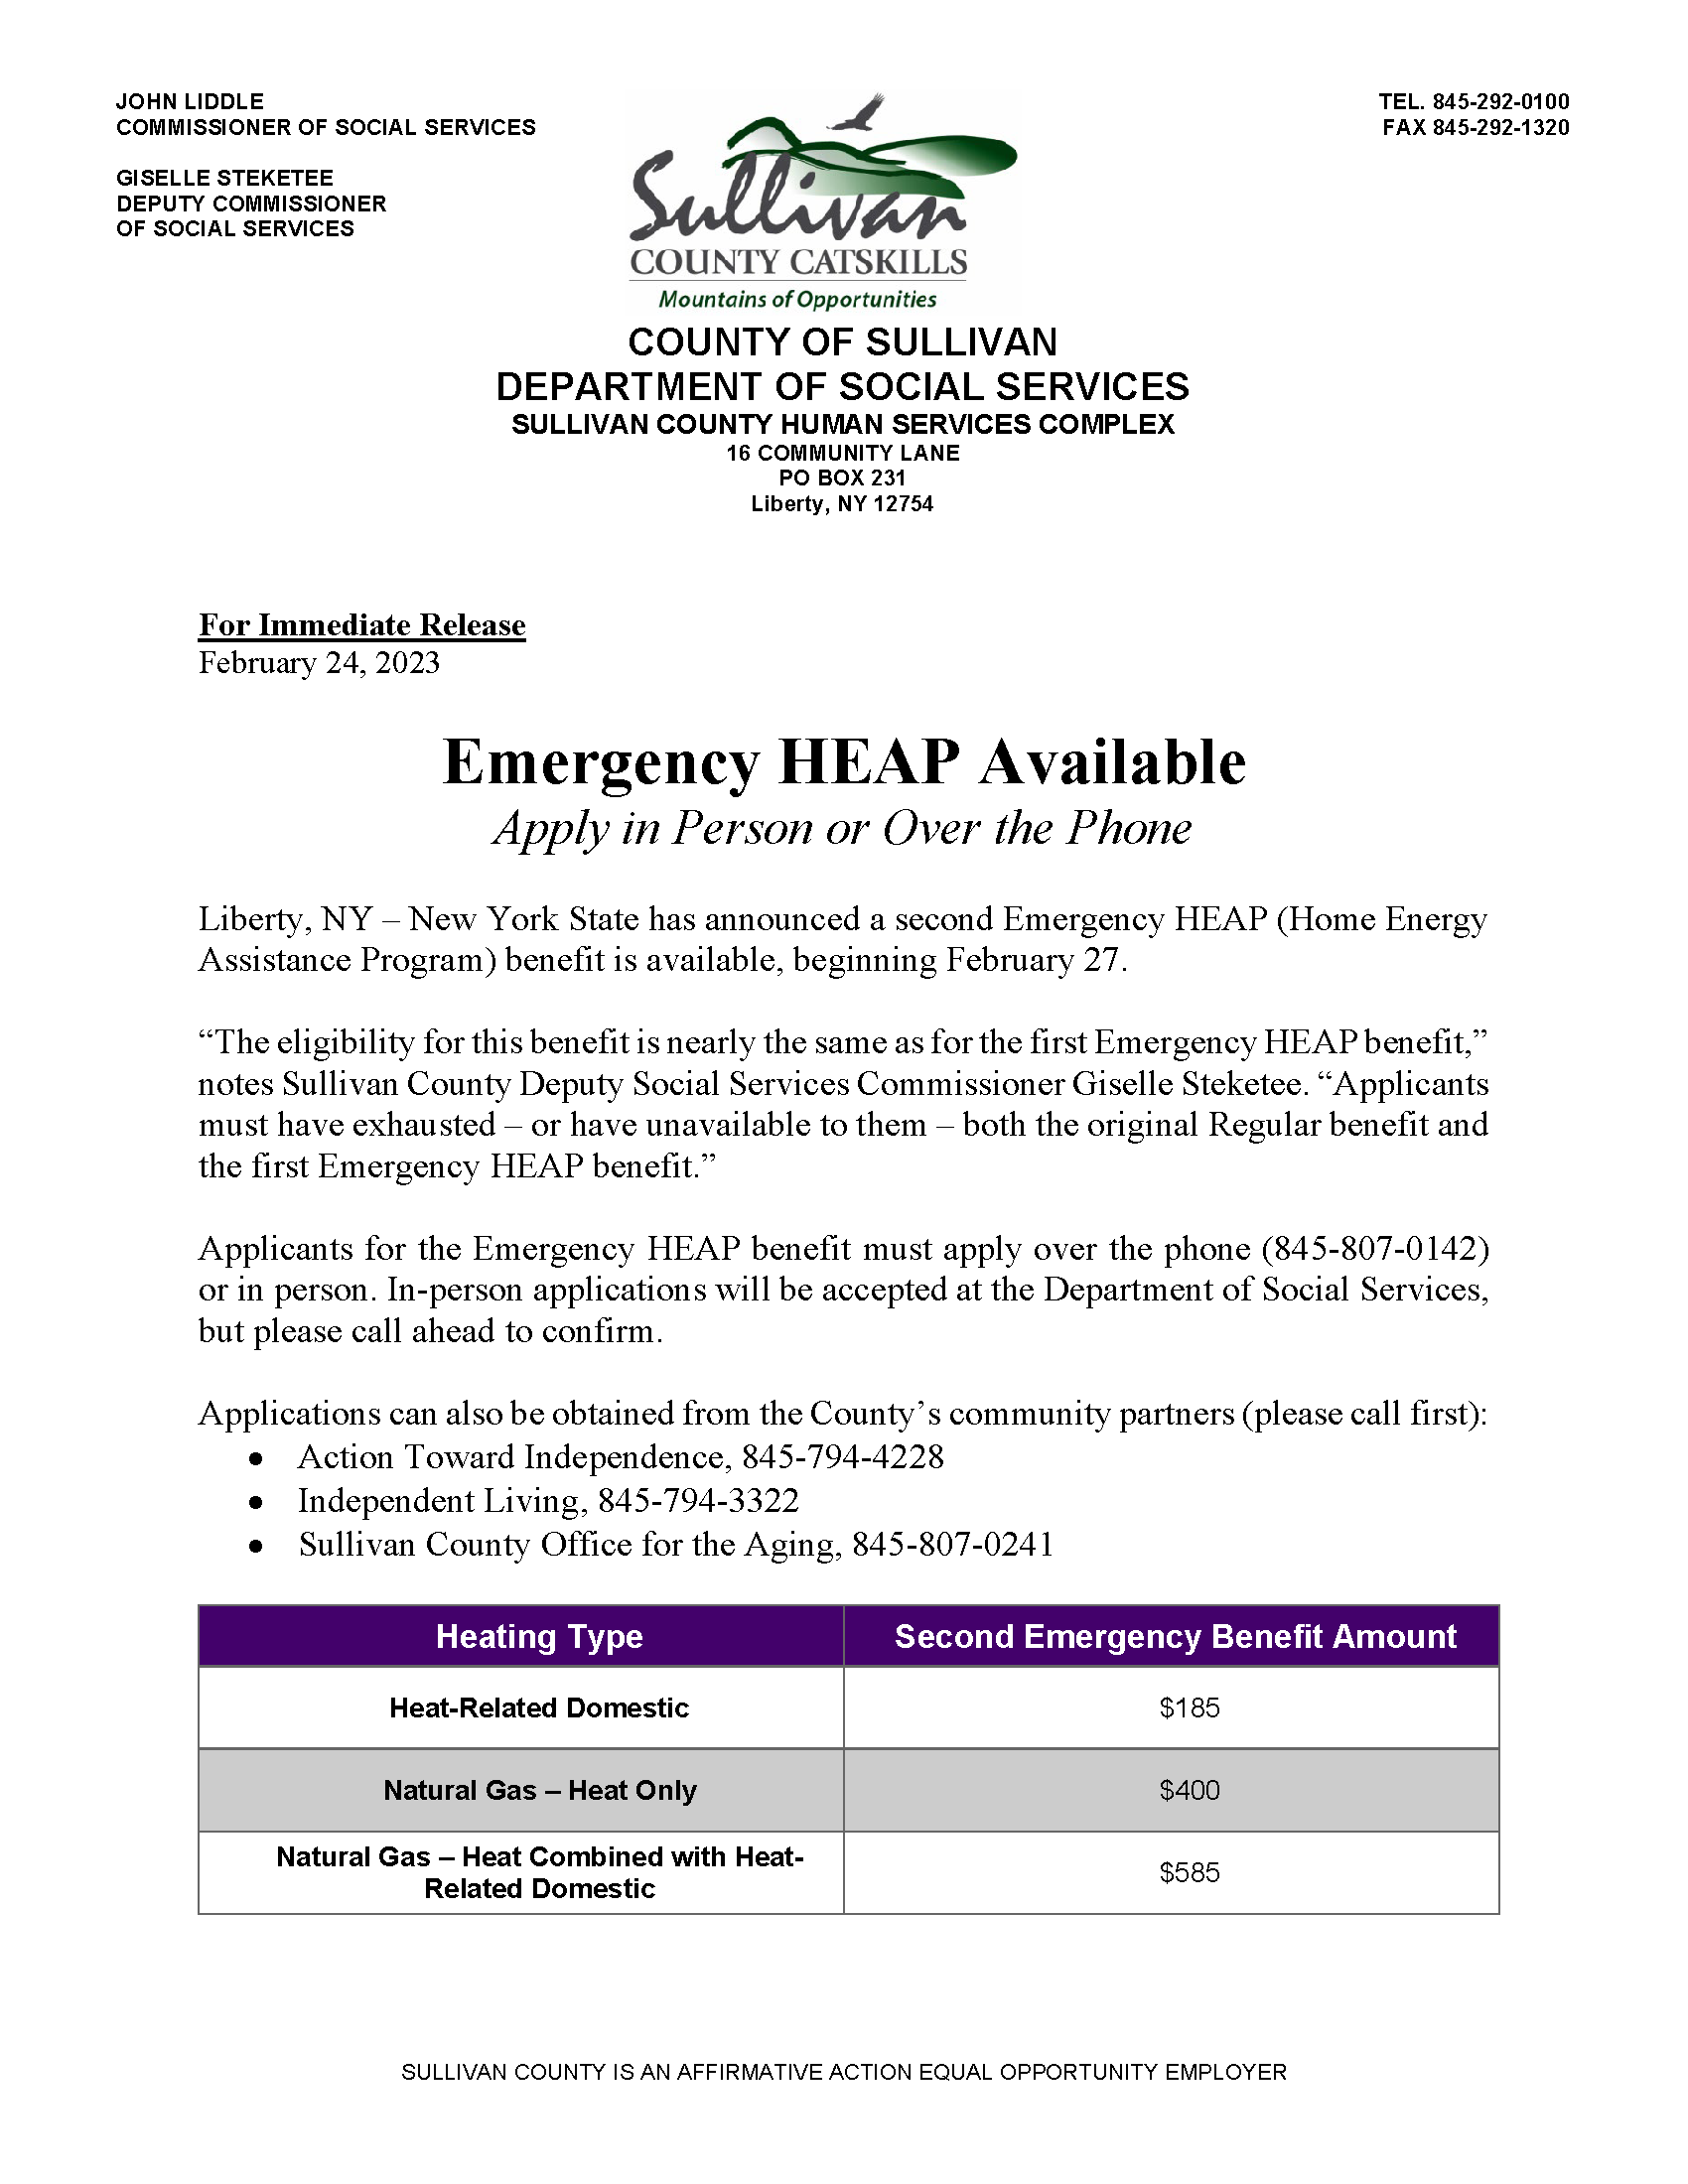 2023-02-24 Emergency HEAP_Page_1